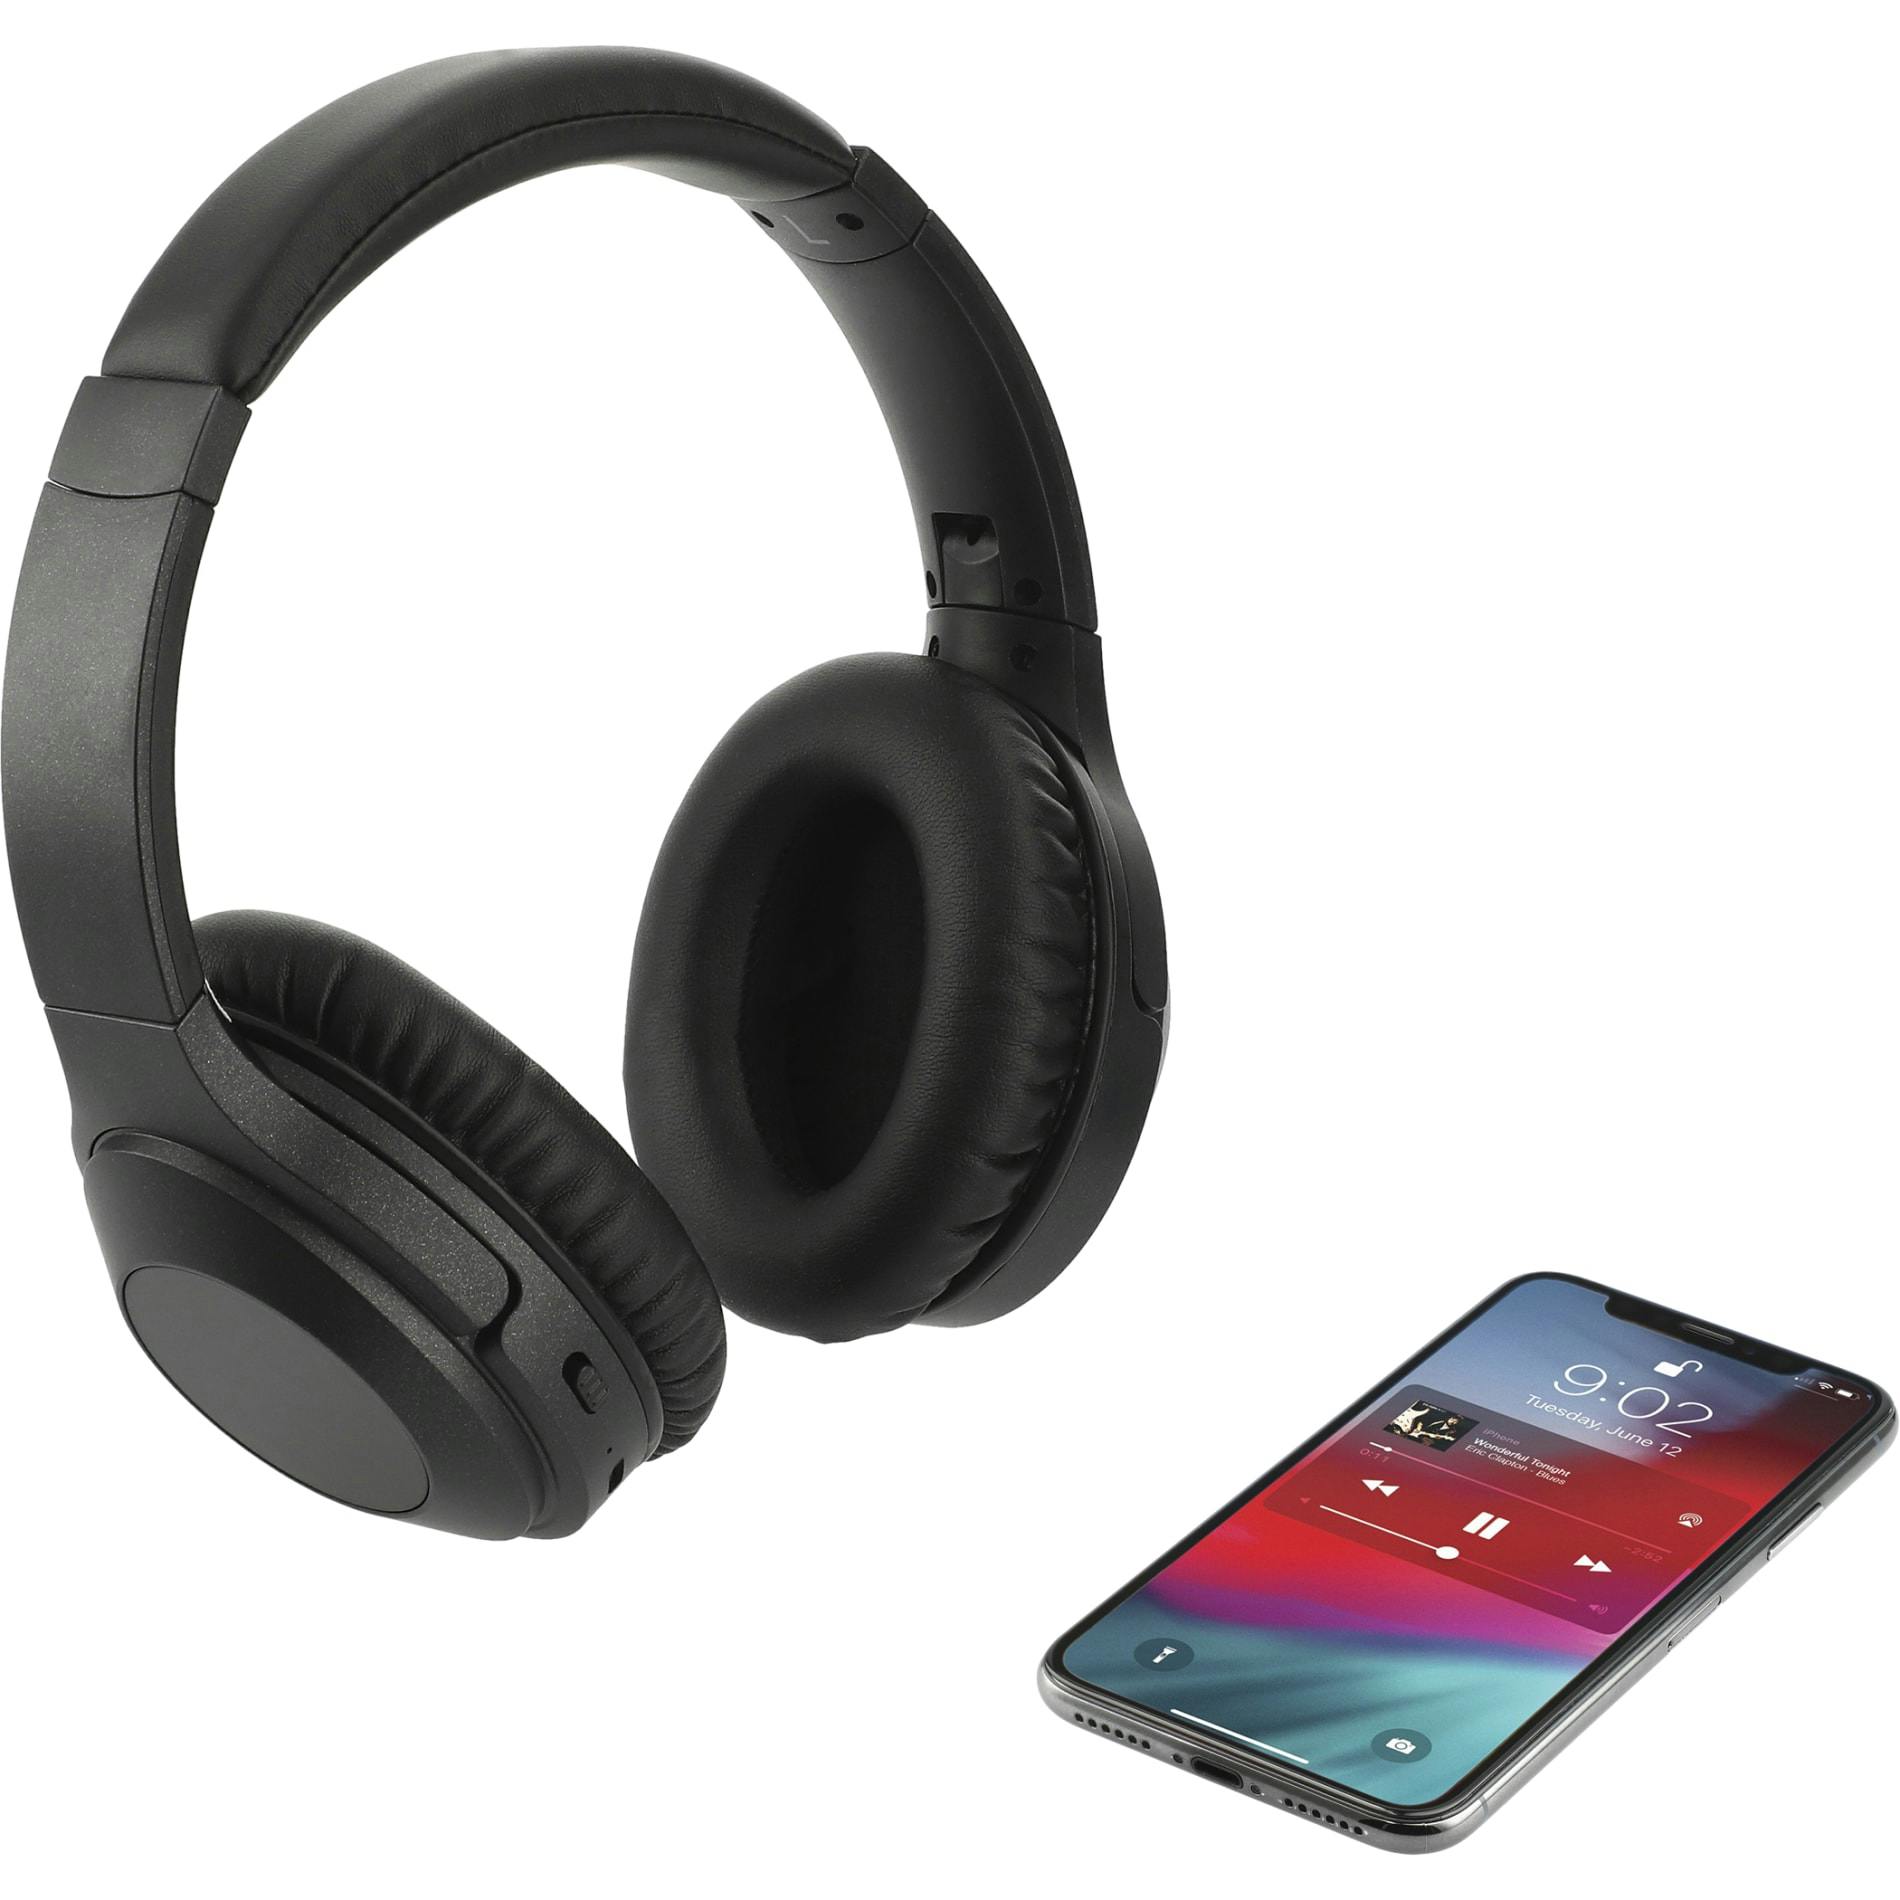 Hush Active Noise Cancellation Bluetooth Headphone - additional Image 8